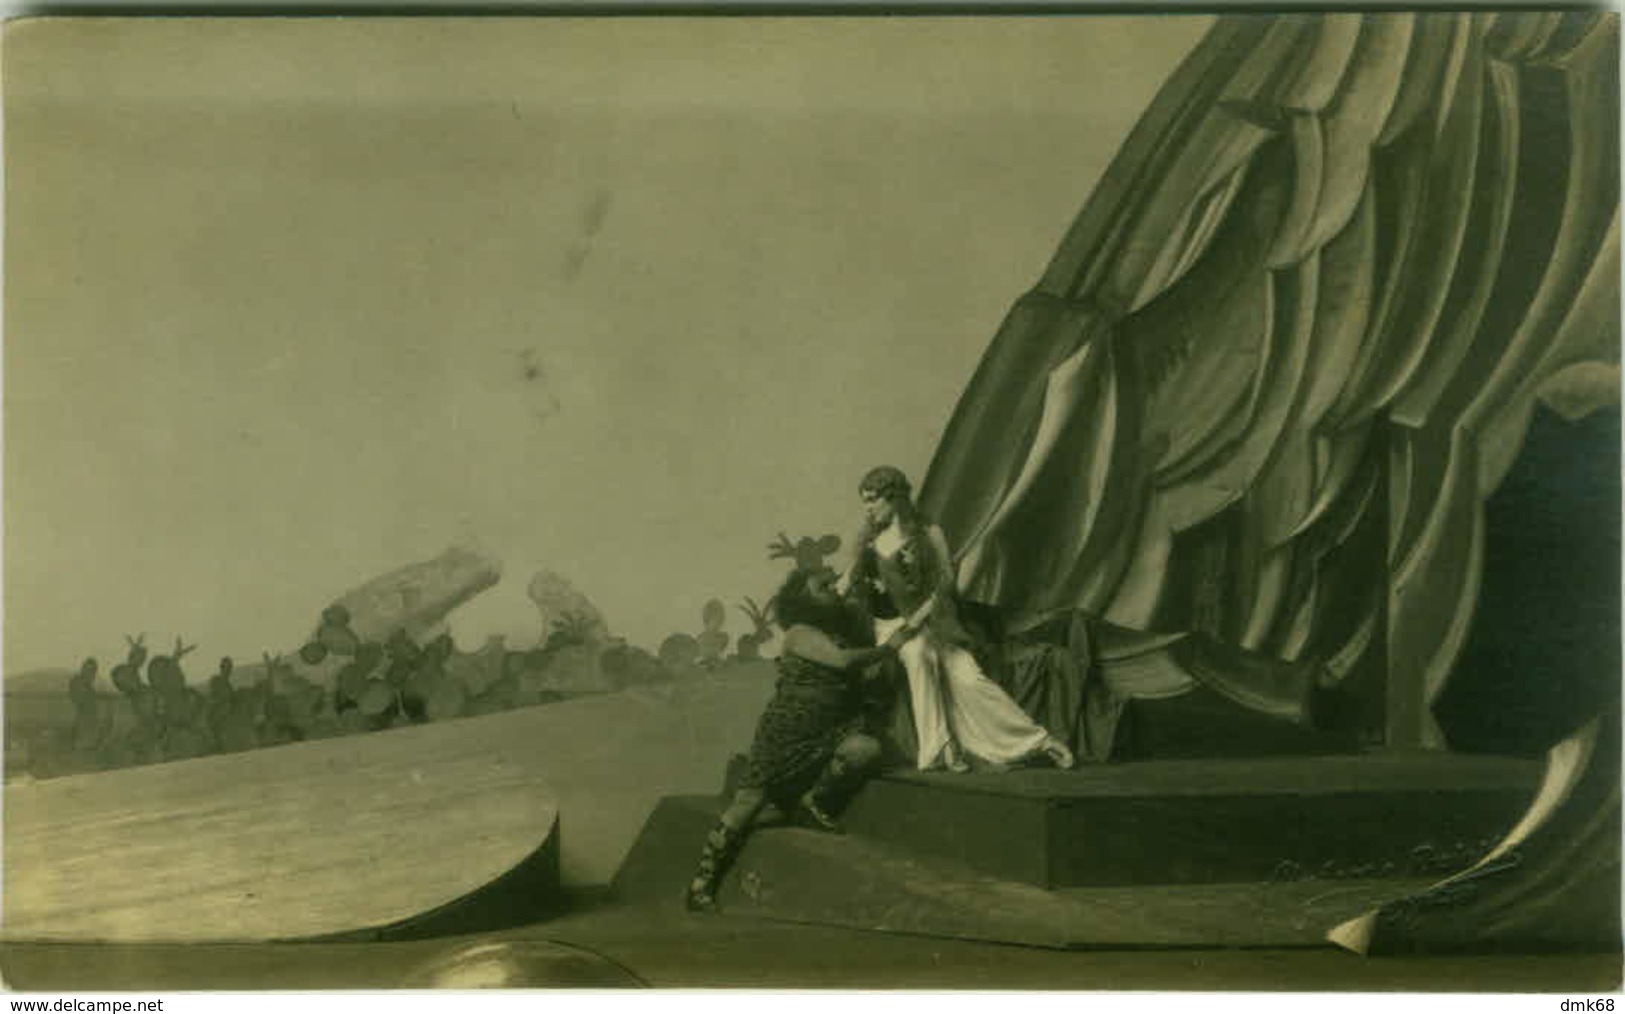 OPERA - EBON STRANDIN - SIMSON OCH DELILA - PHOTO BY ALMBERG & PREINITZ STOCKHOLM  - RPPC POSTCARD 1920s (BG1384) - Cantanti E Musicisti